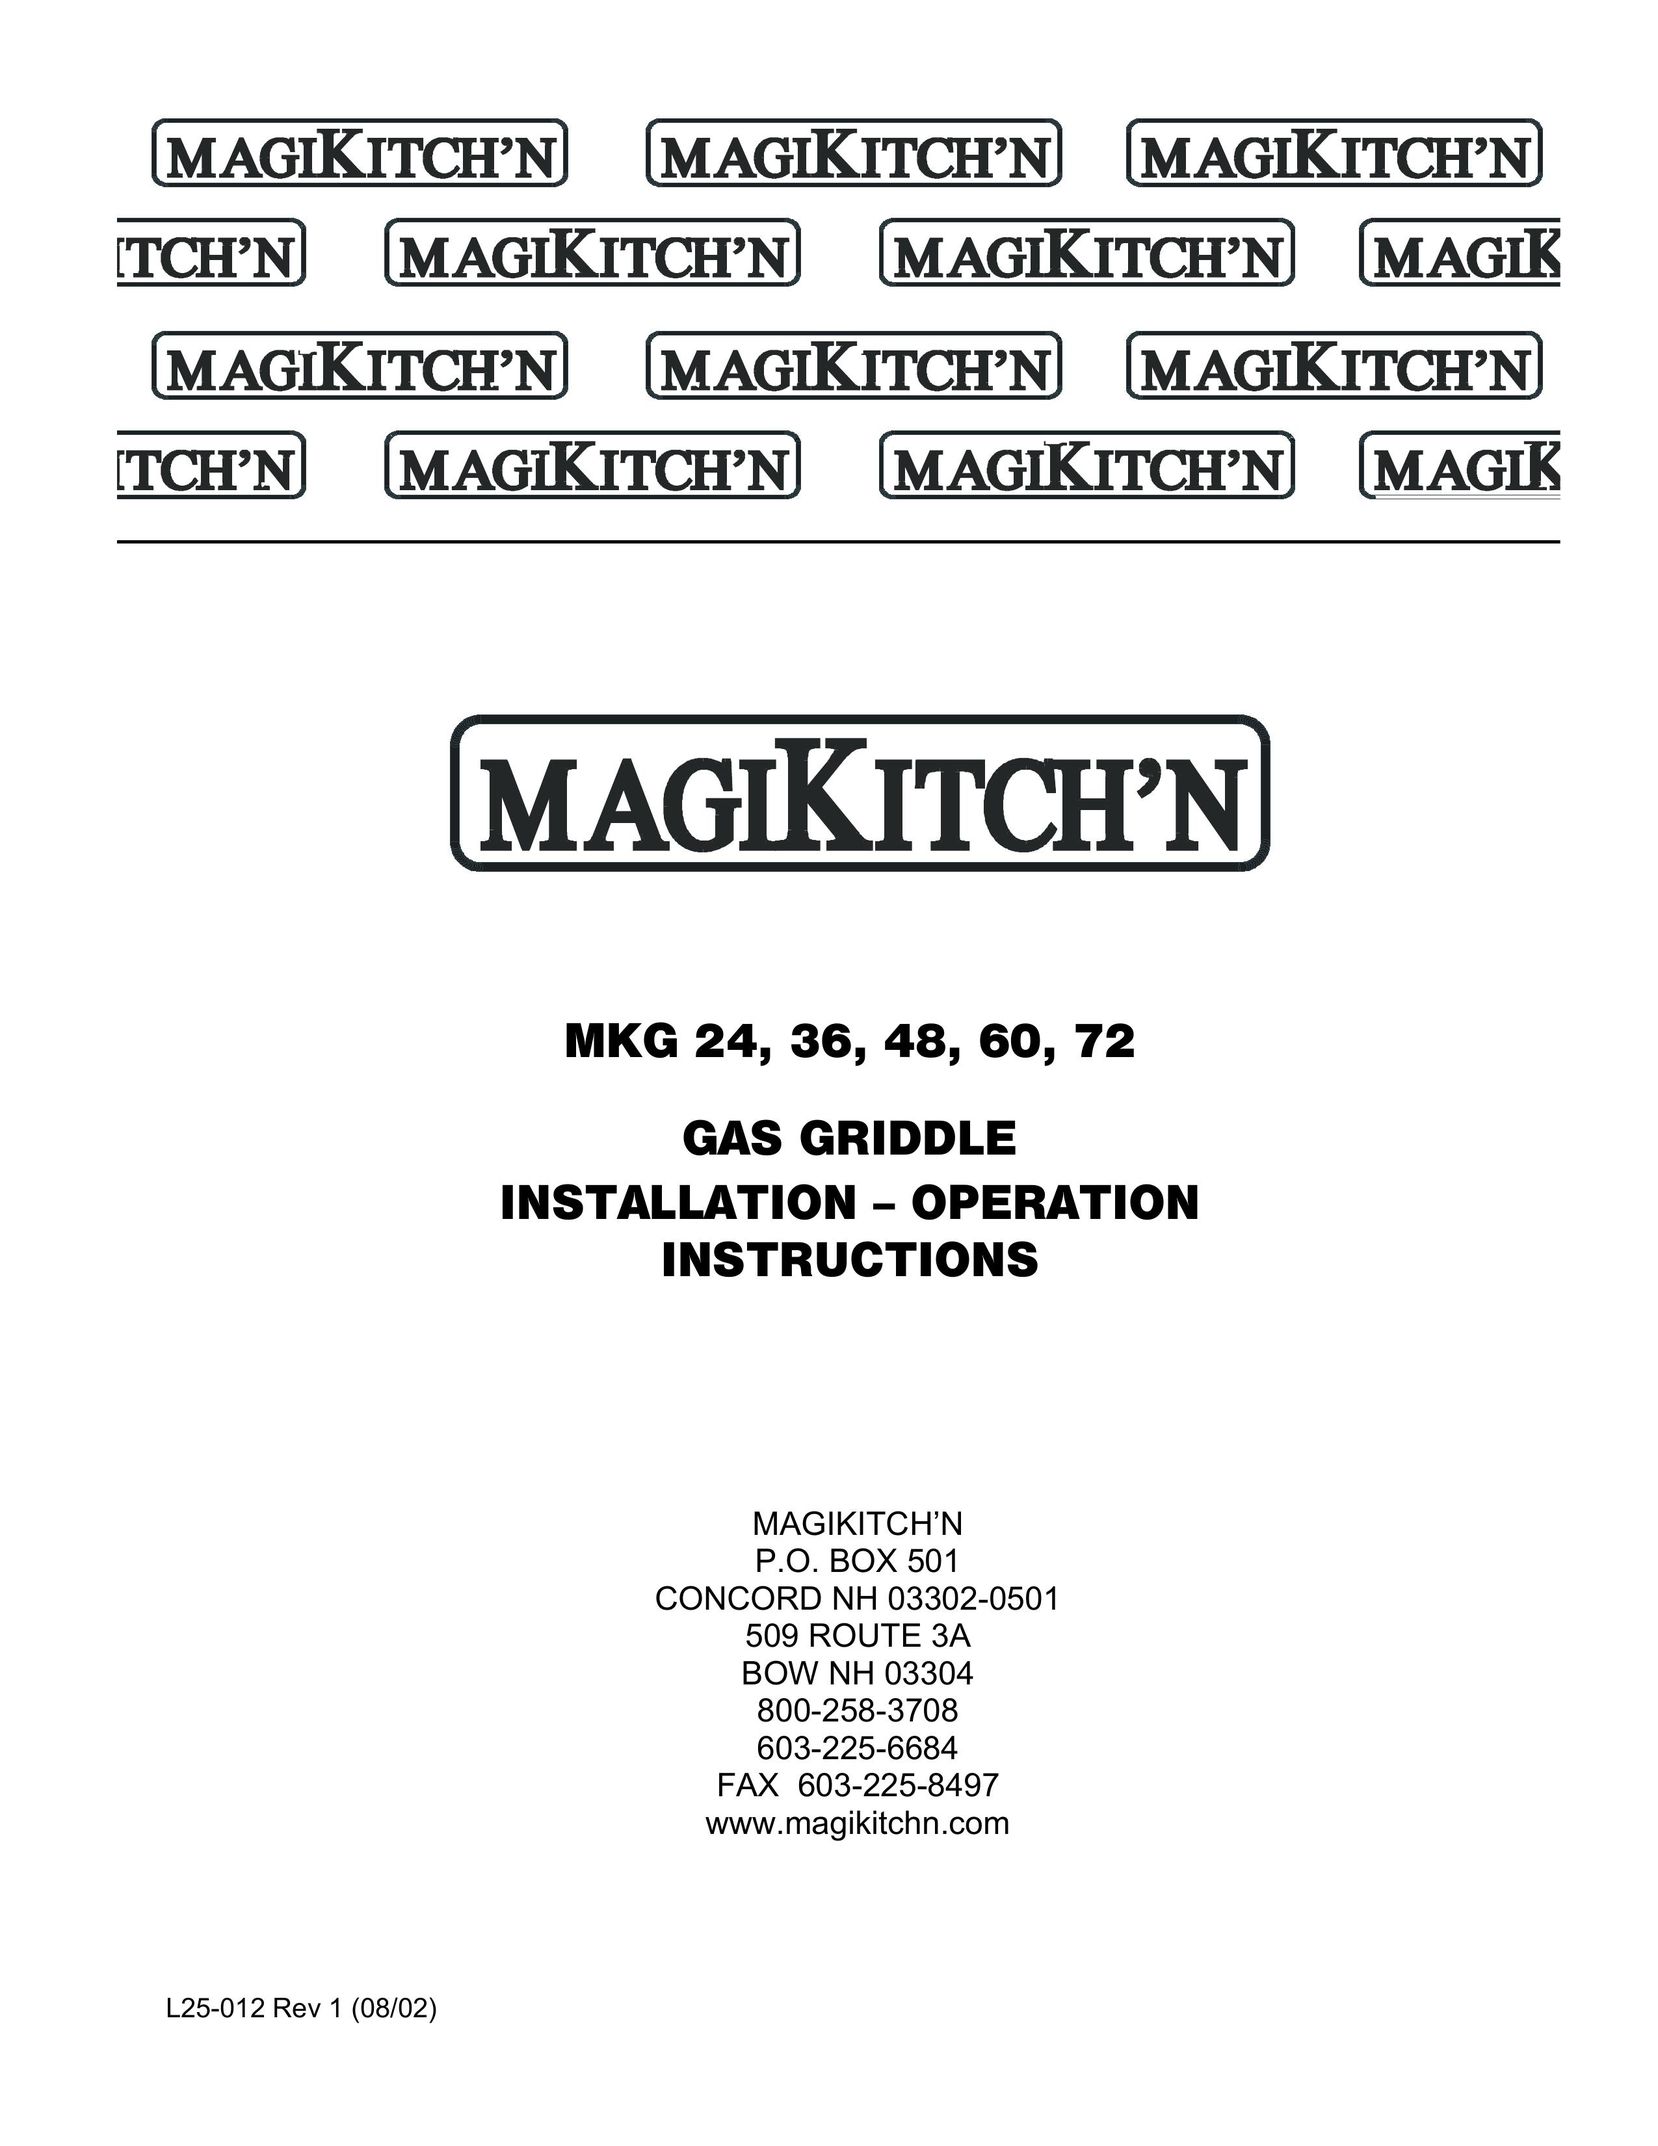 Magikitch'n MKG60 Griddle User Manual